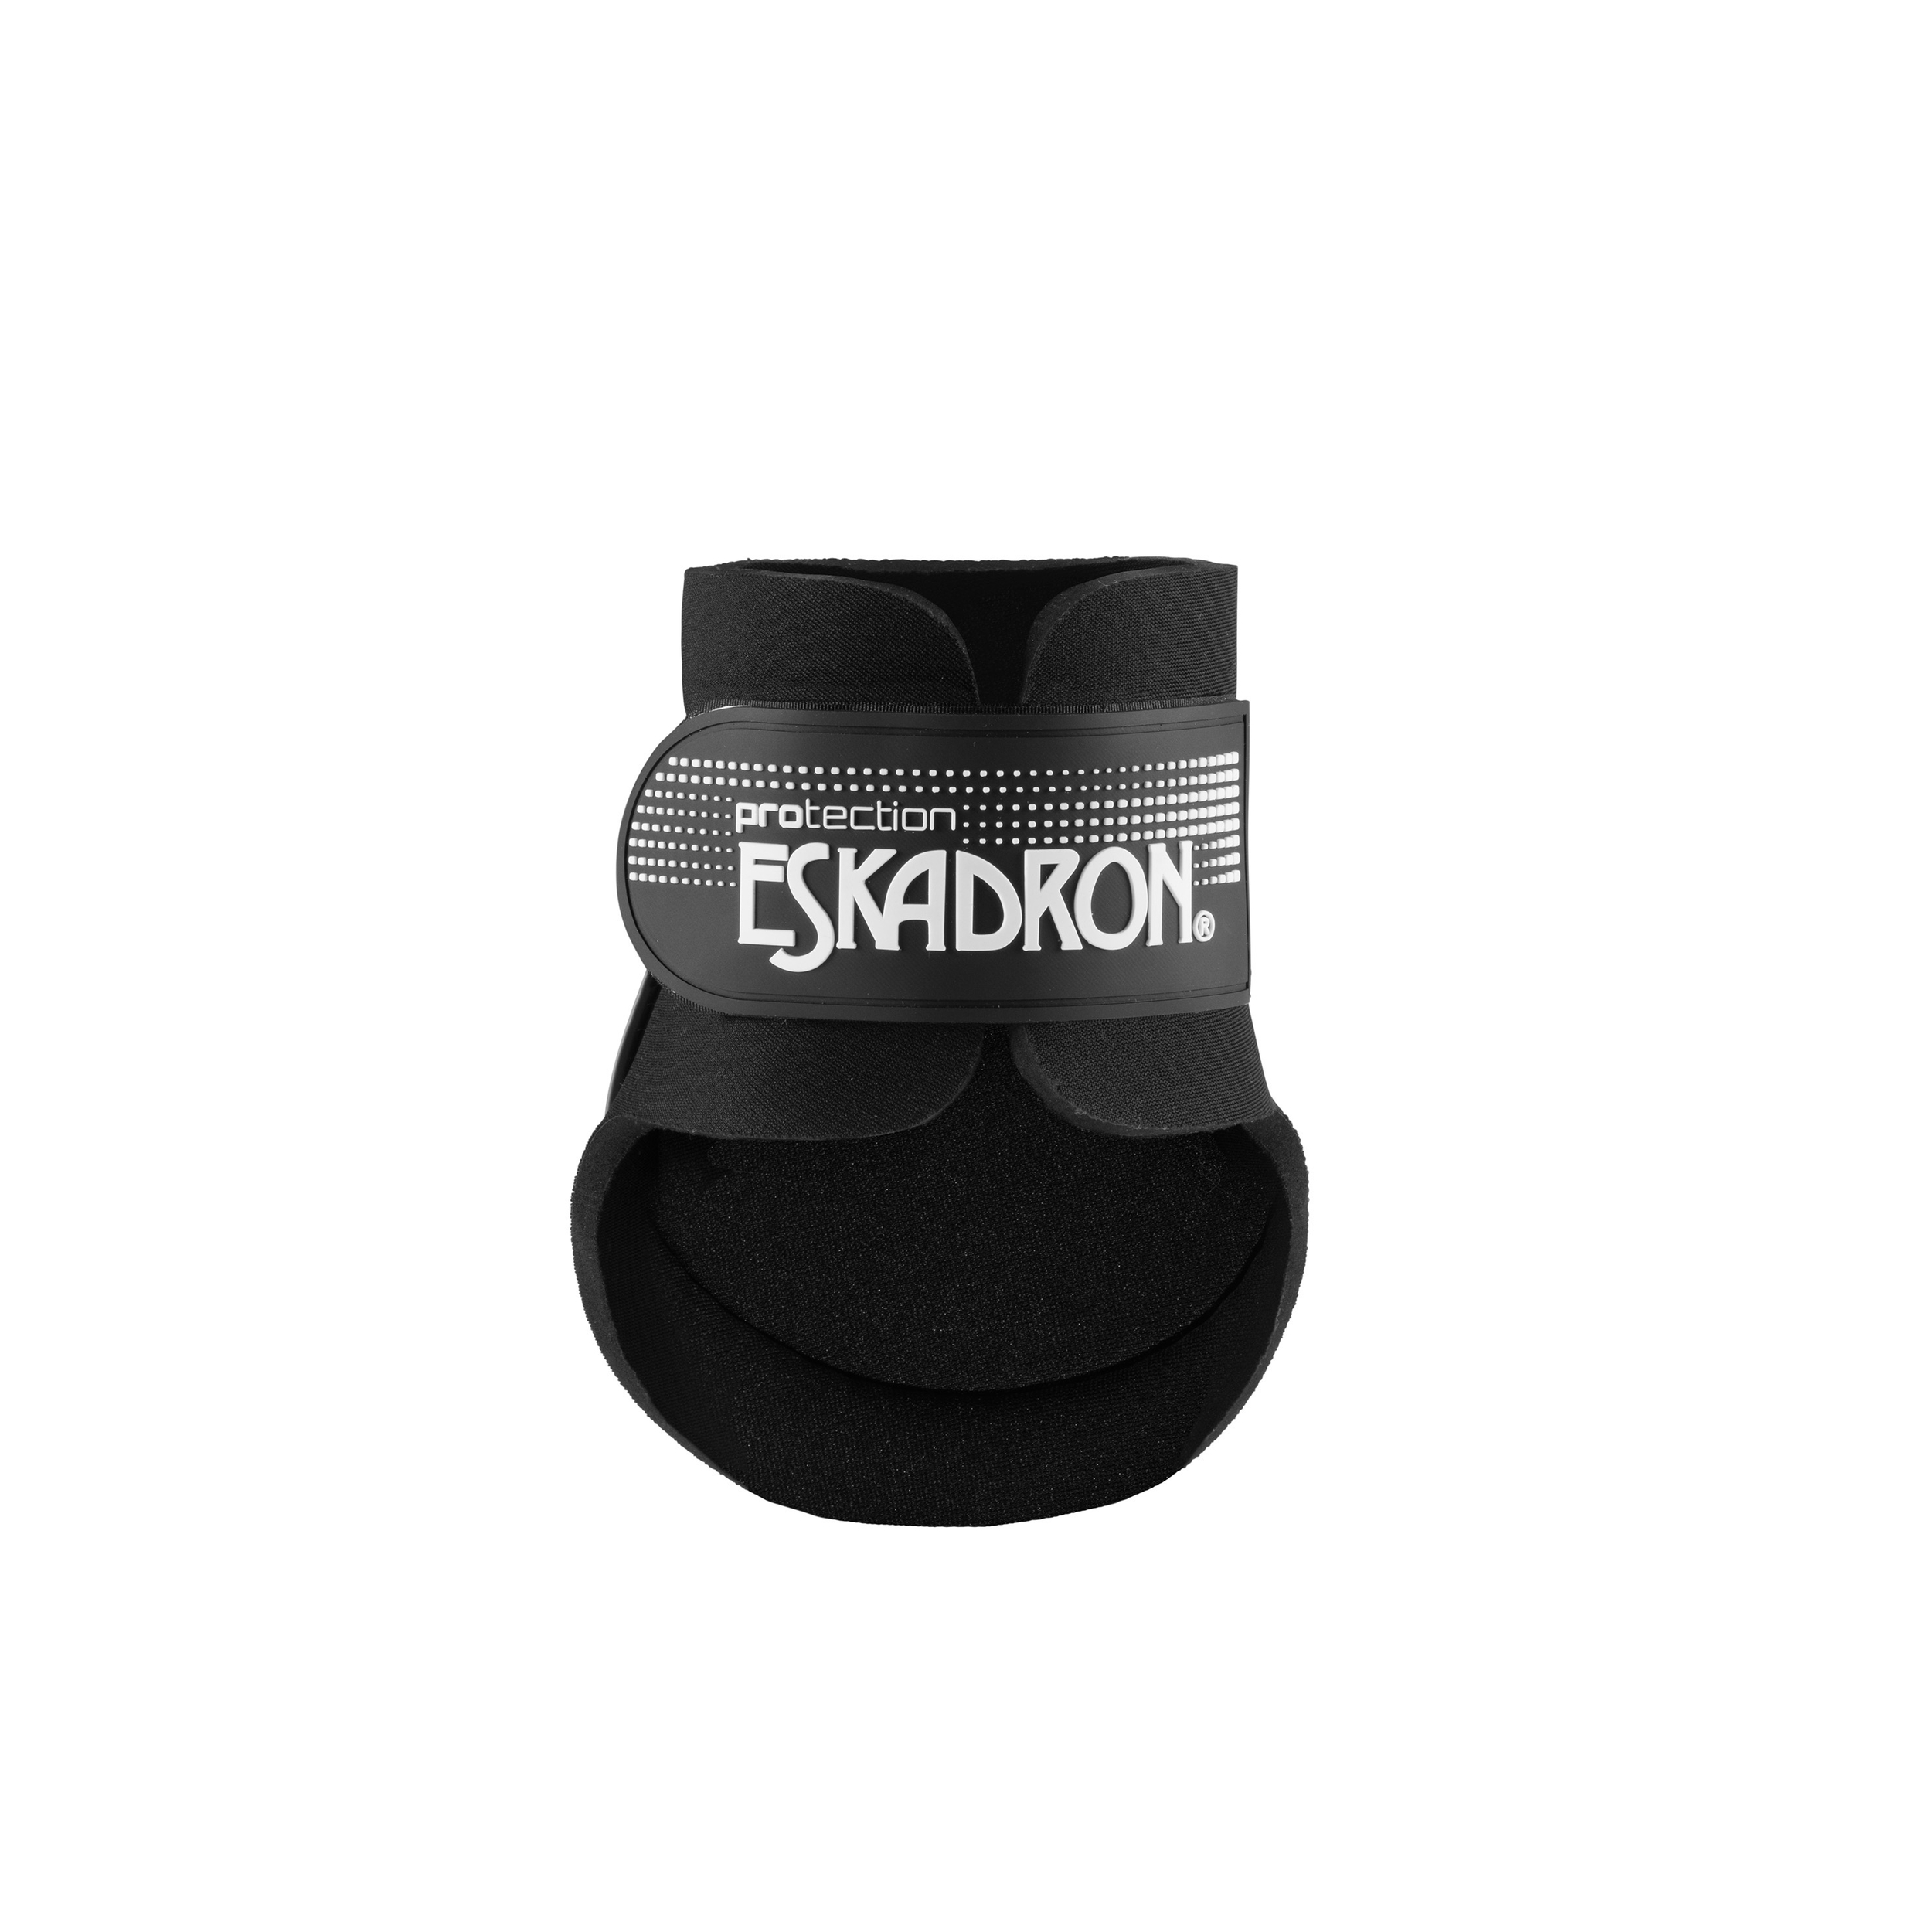 ESKADRON Basics Streichkappen Protection hinten - black - WB - 8